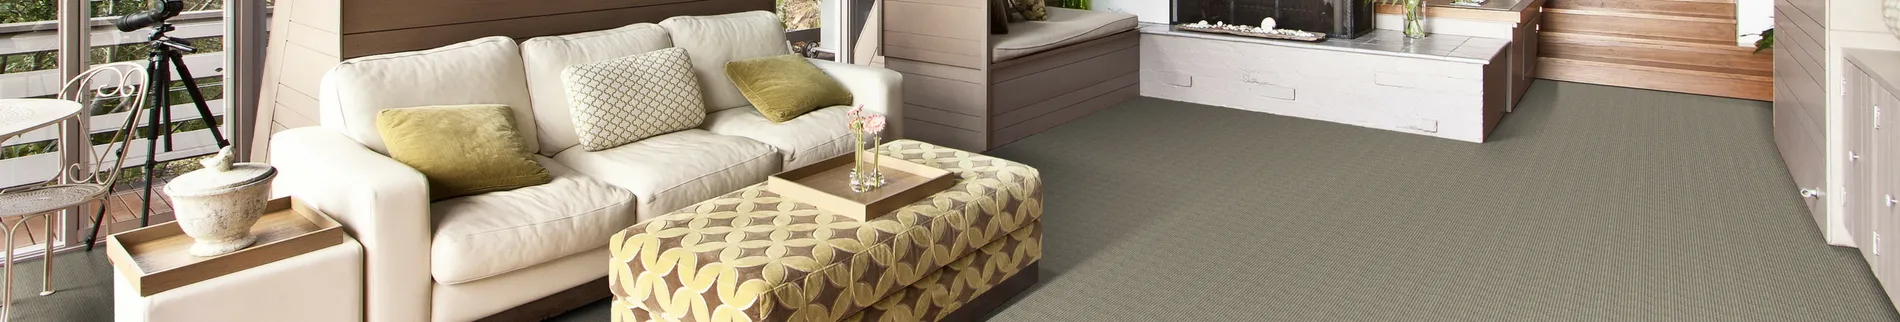 carpet with beige furniture